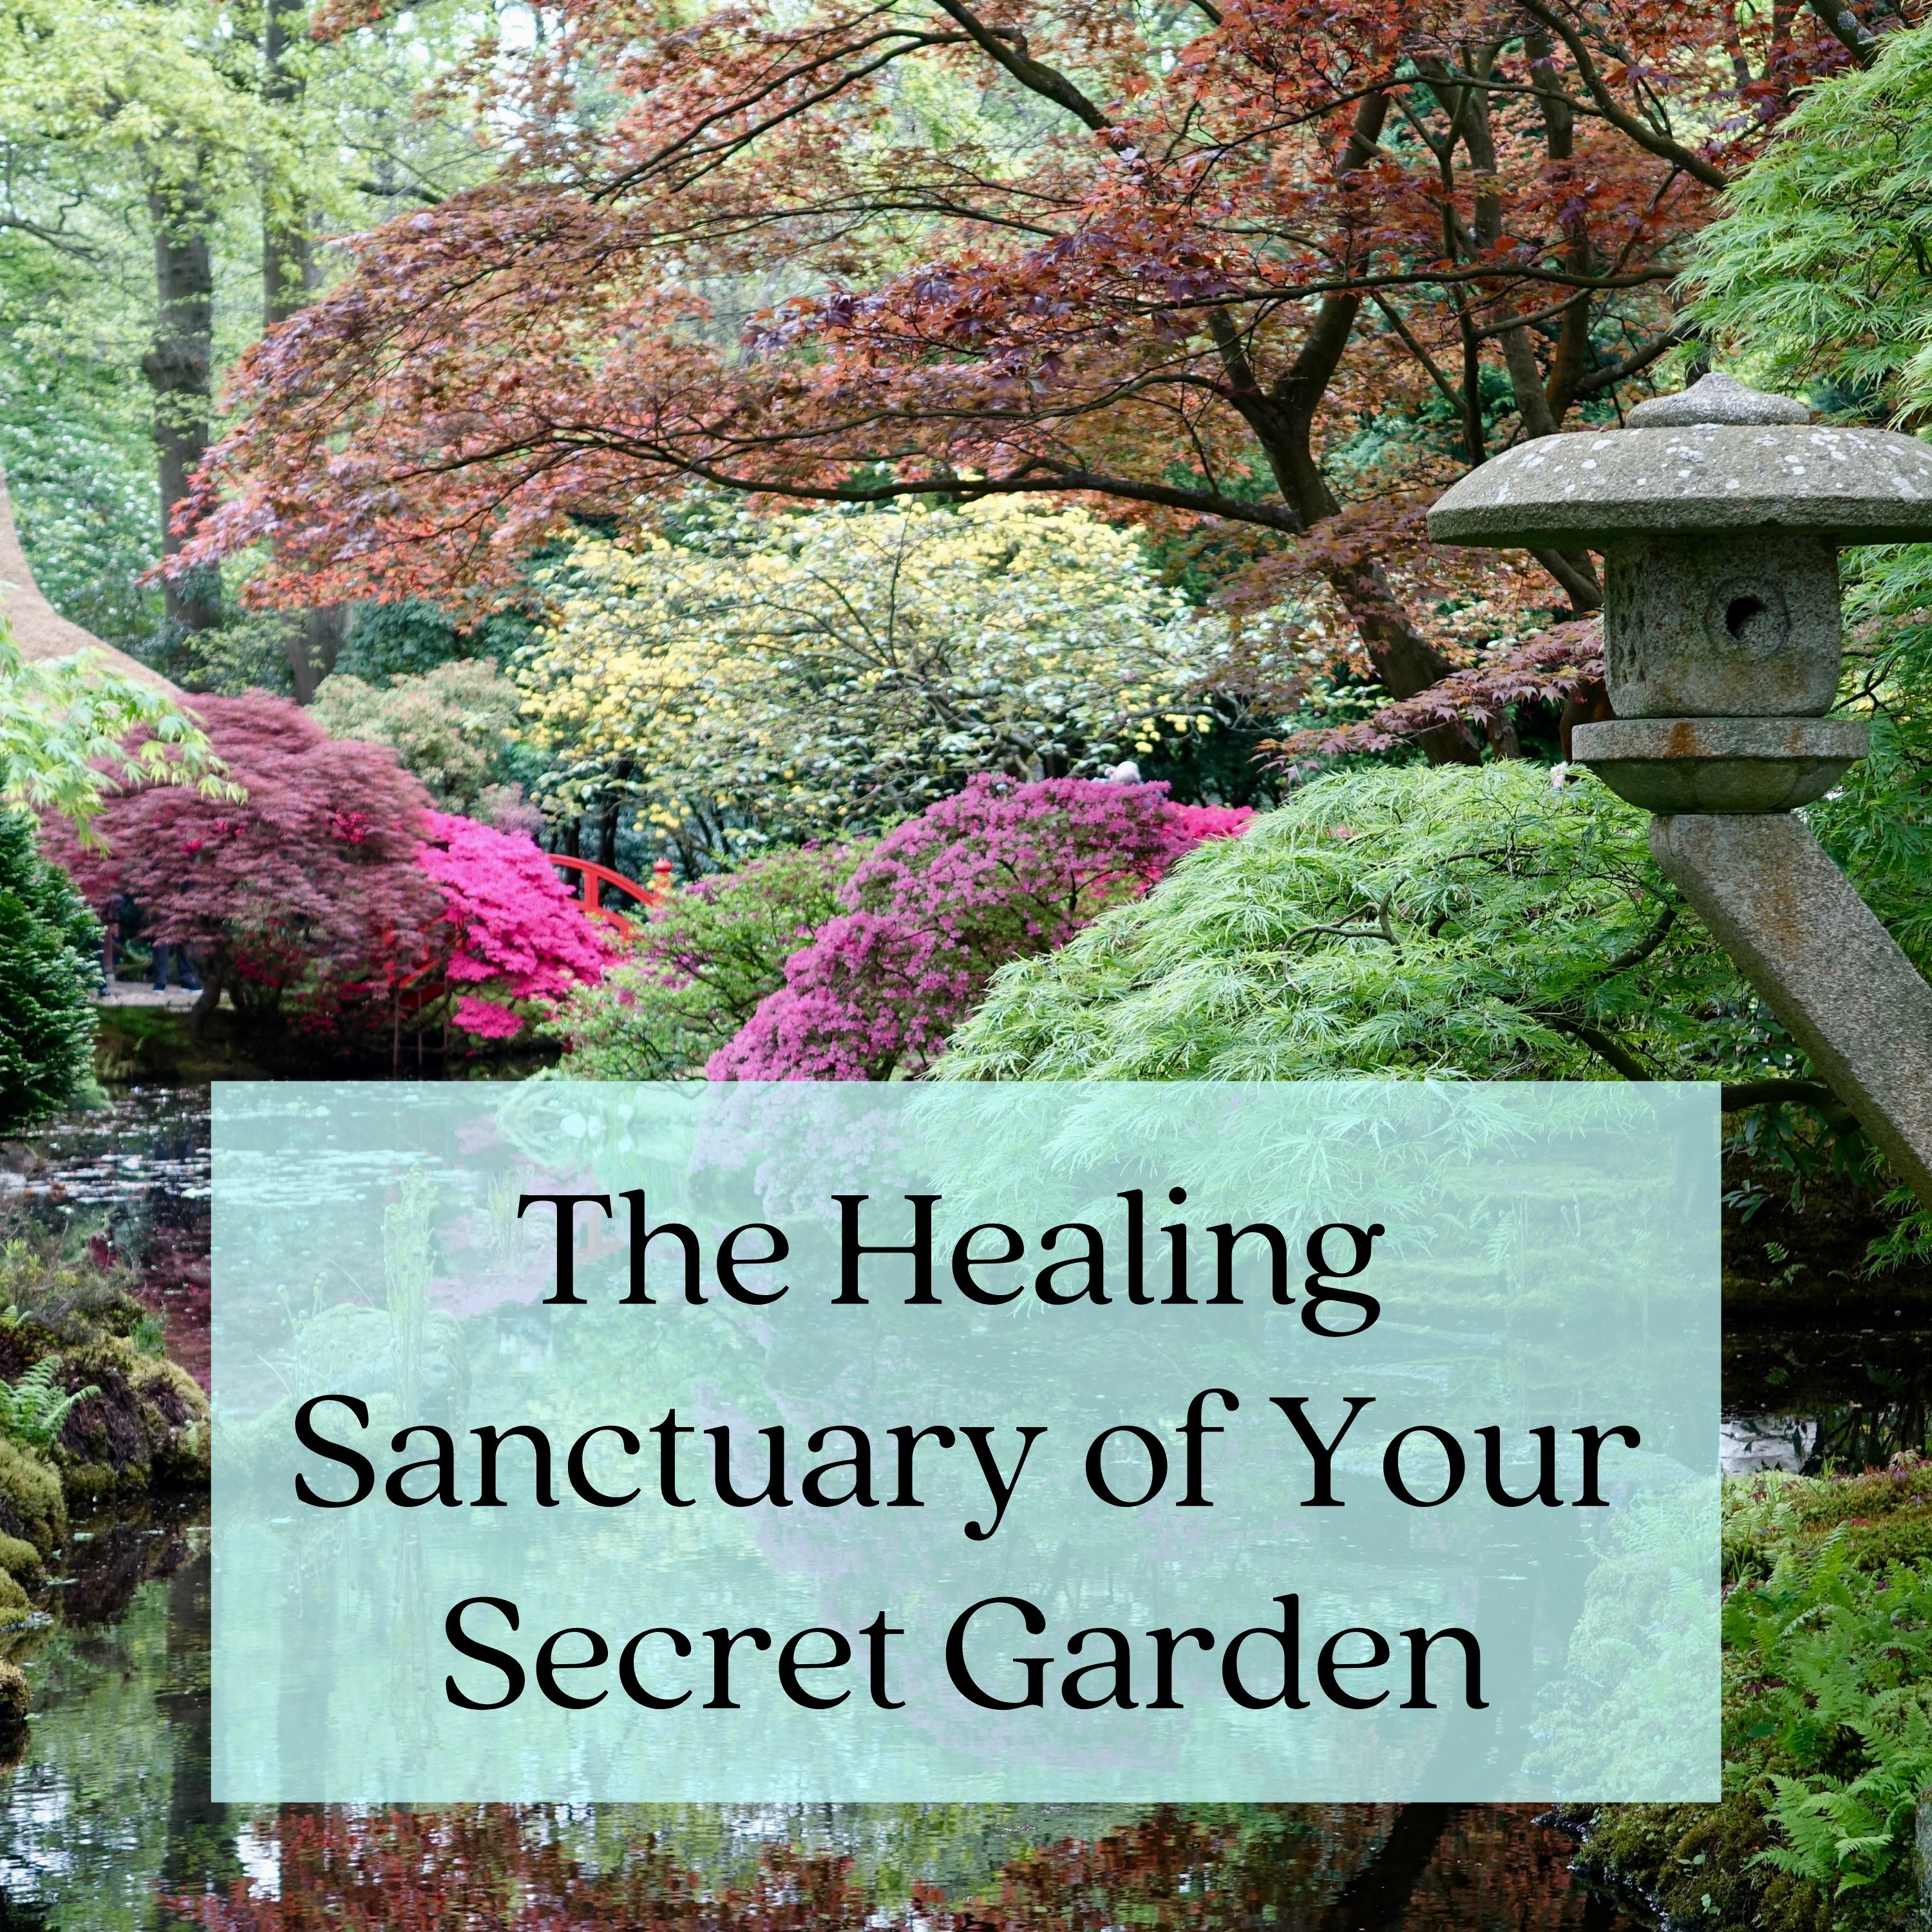 Meditation: The Healing Sanctuary of Your Secret Garden (13 minutes)